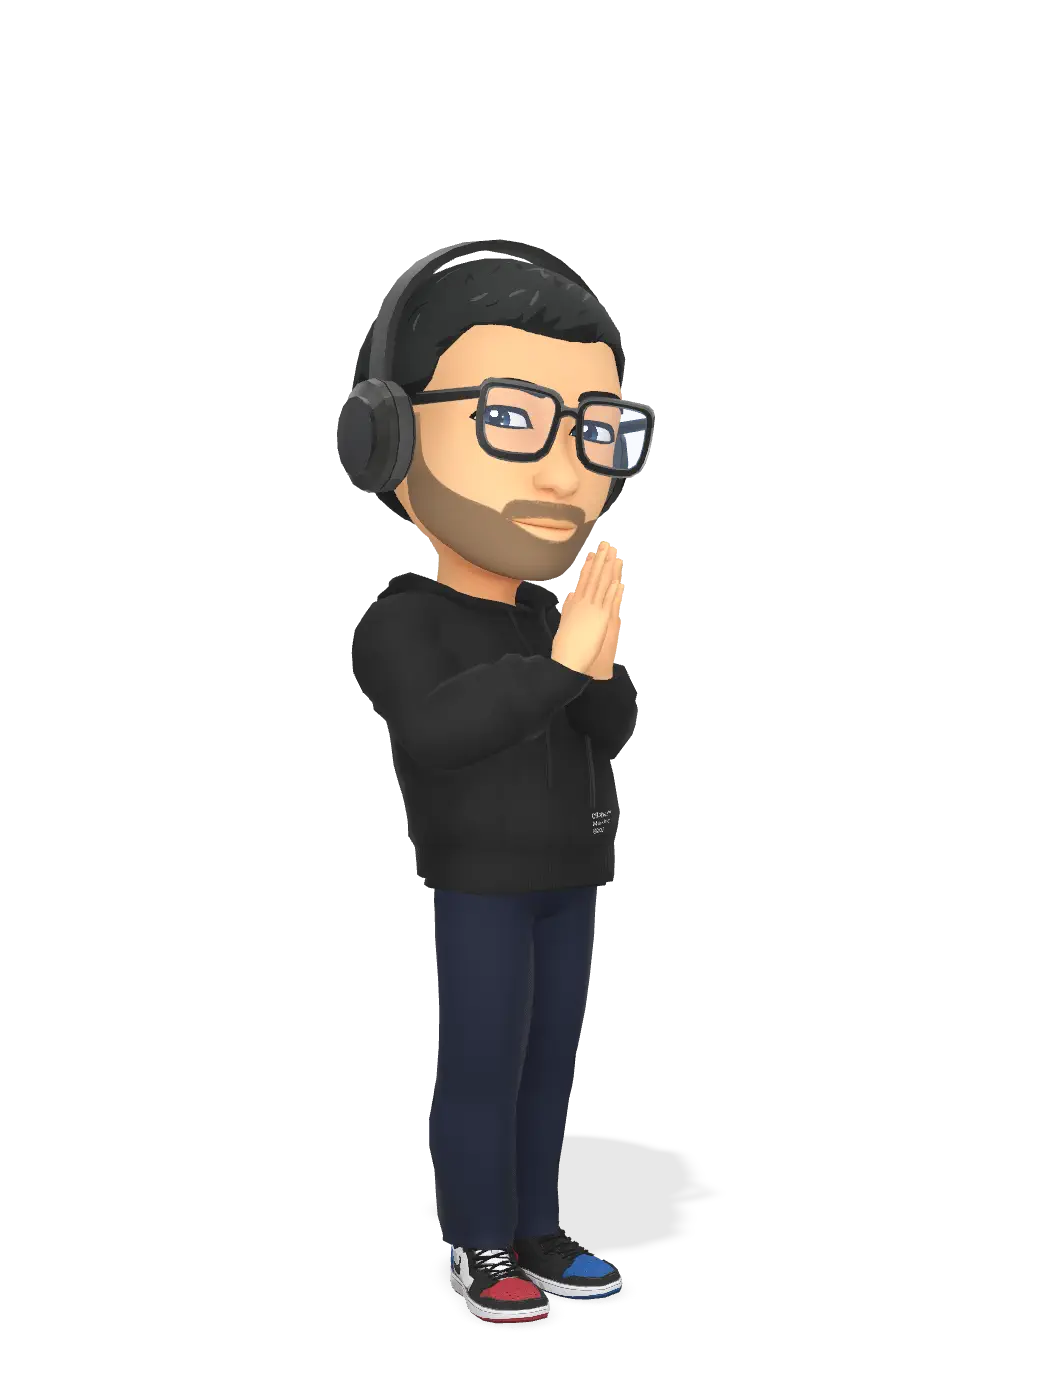 3D Bitmoji for derajnomis avatar